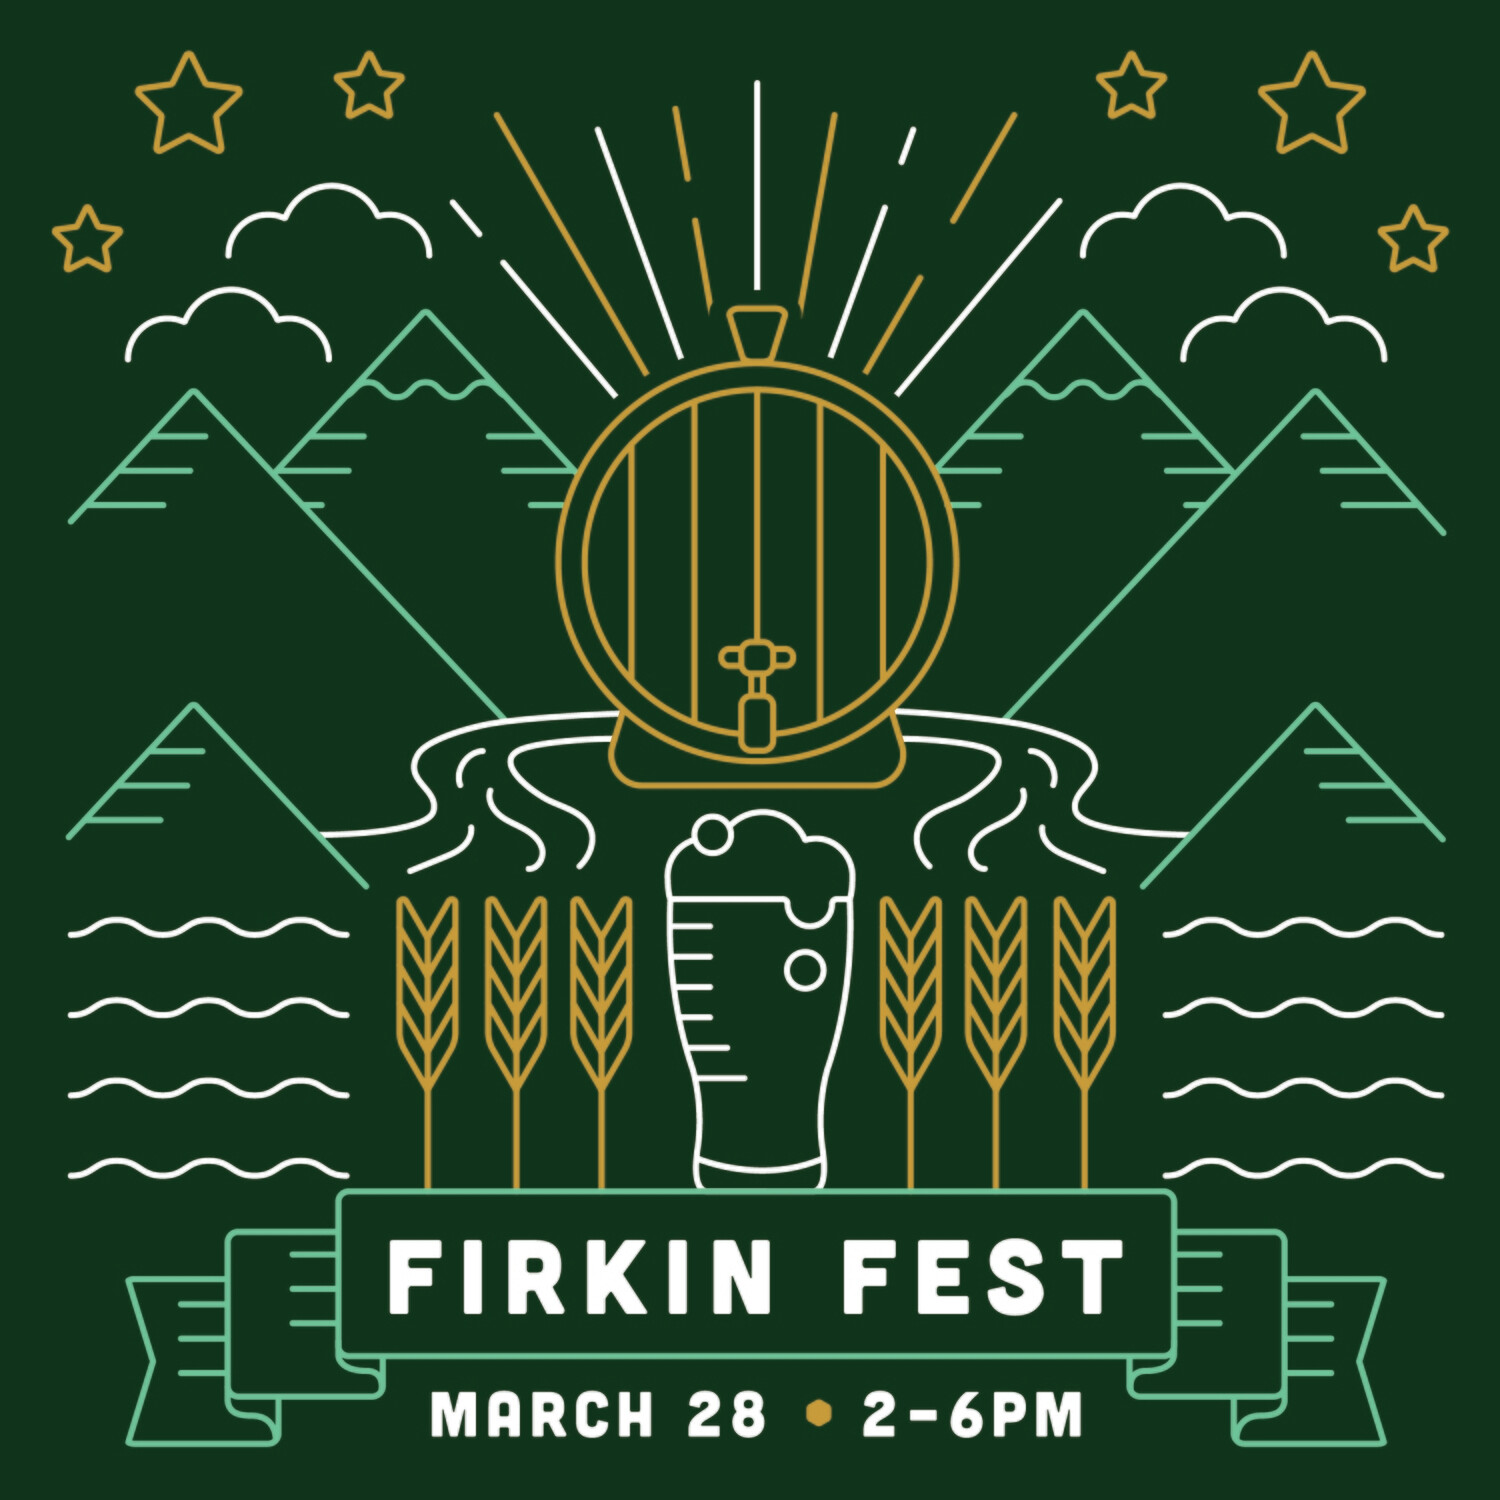 General Admission Firkin Fest Ticket